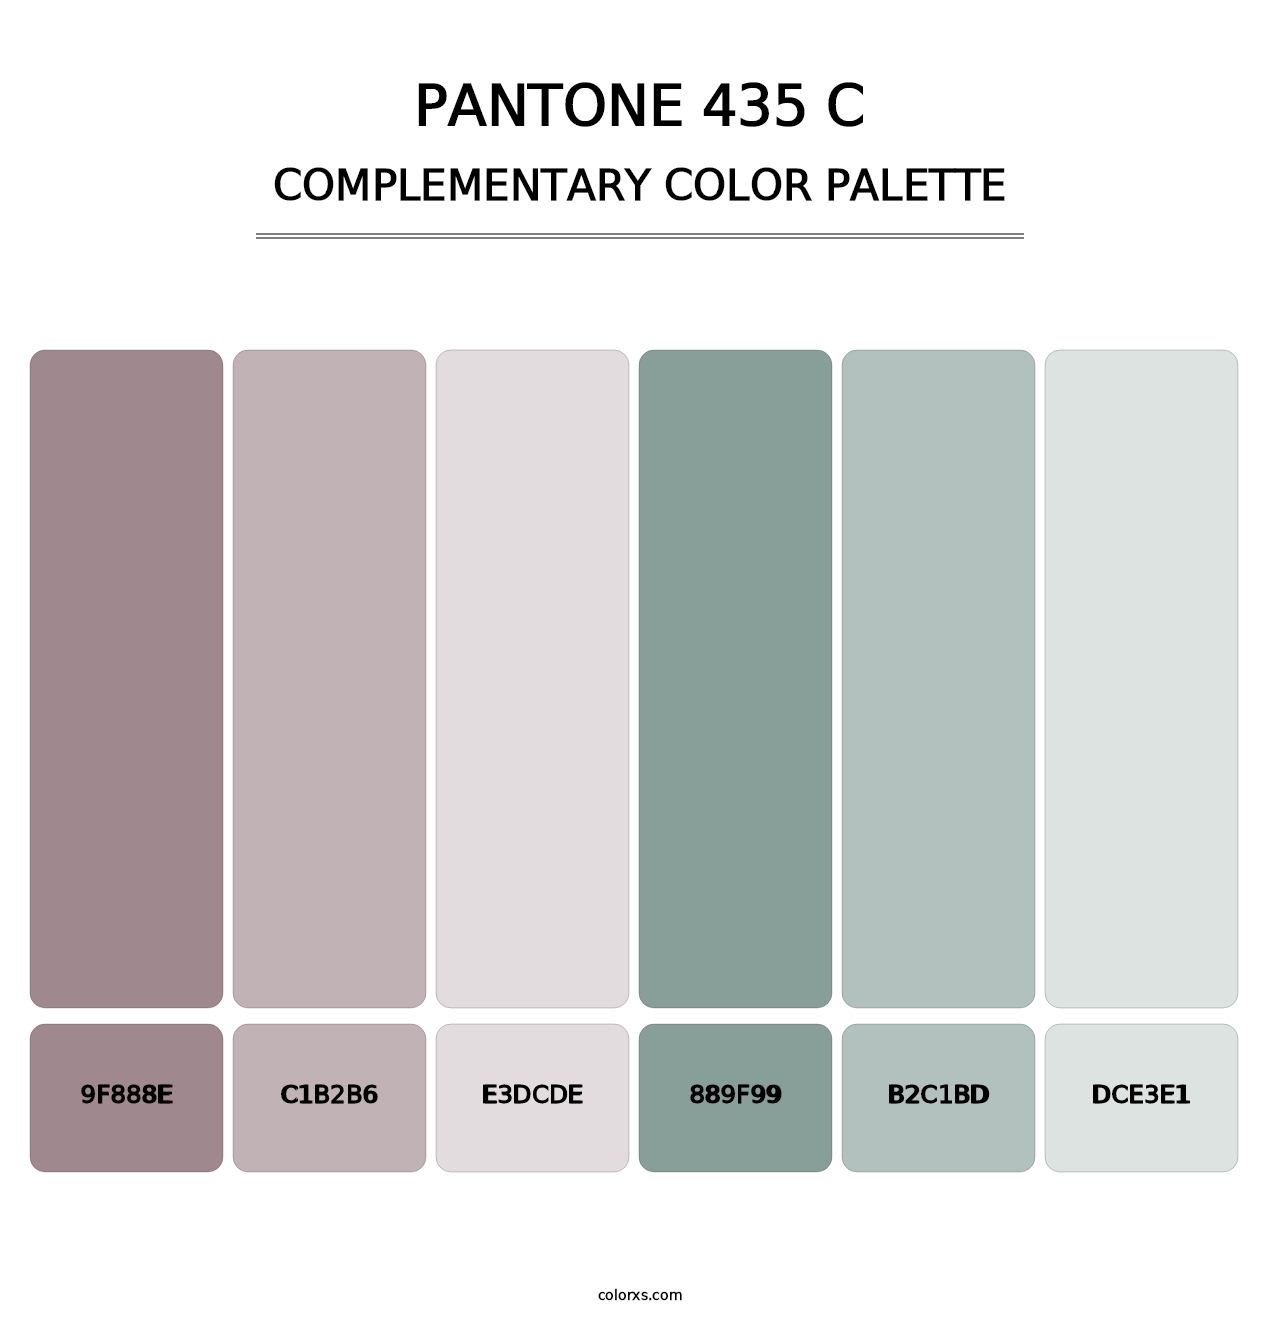 PANTONE 435 C - Complementary Color Palette